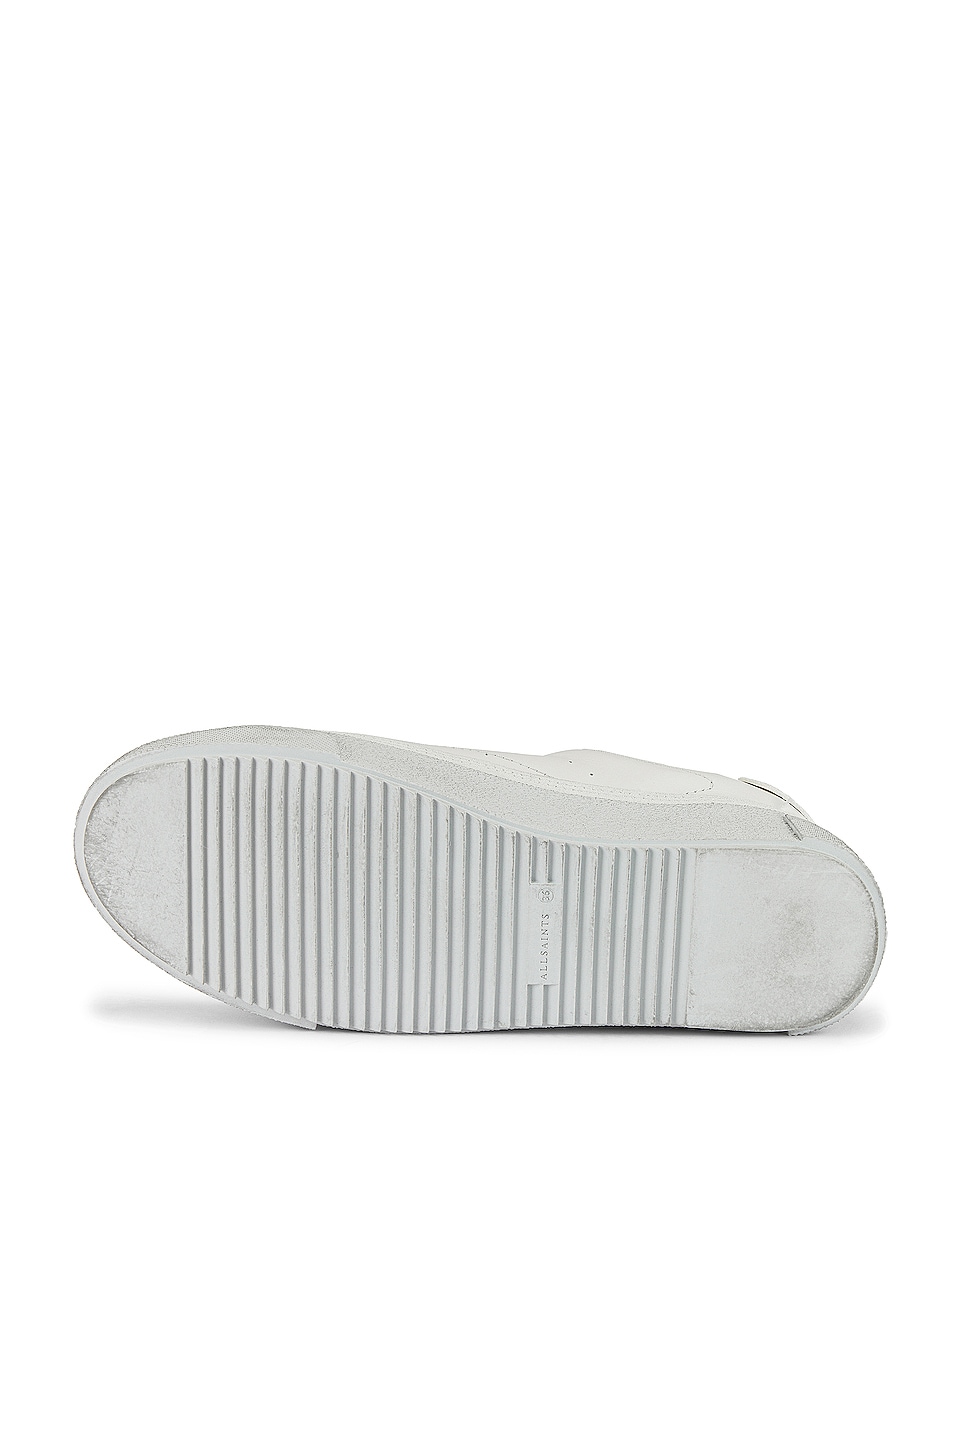 ALLSAINTS Trish Sneaker in Chalk White | REVOLVE